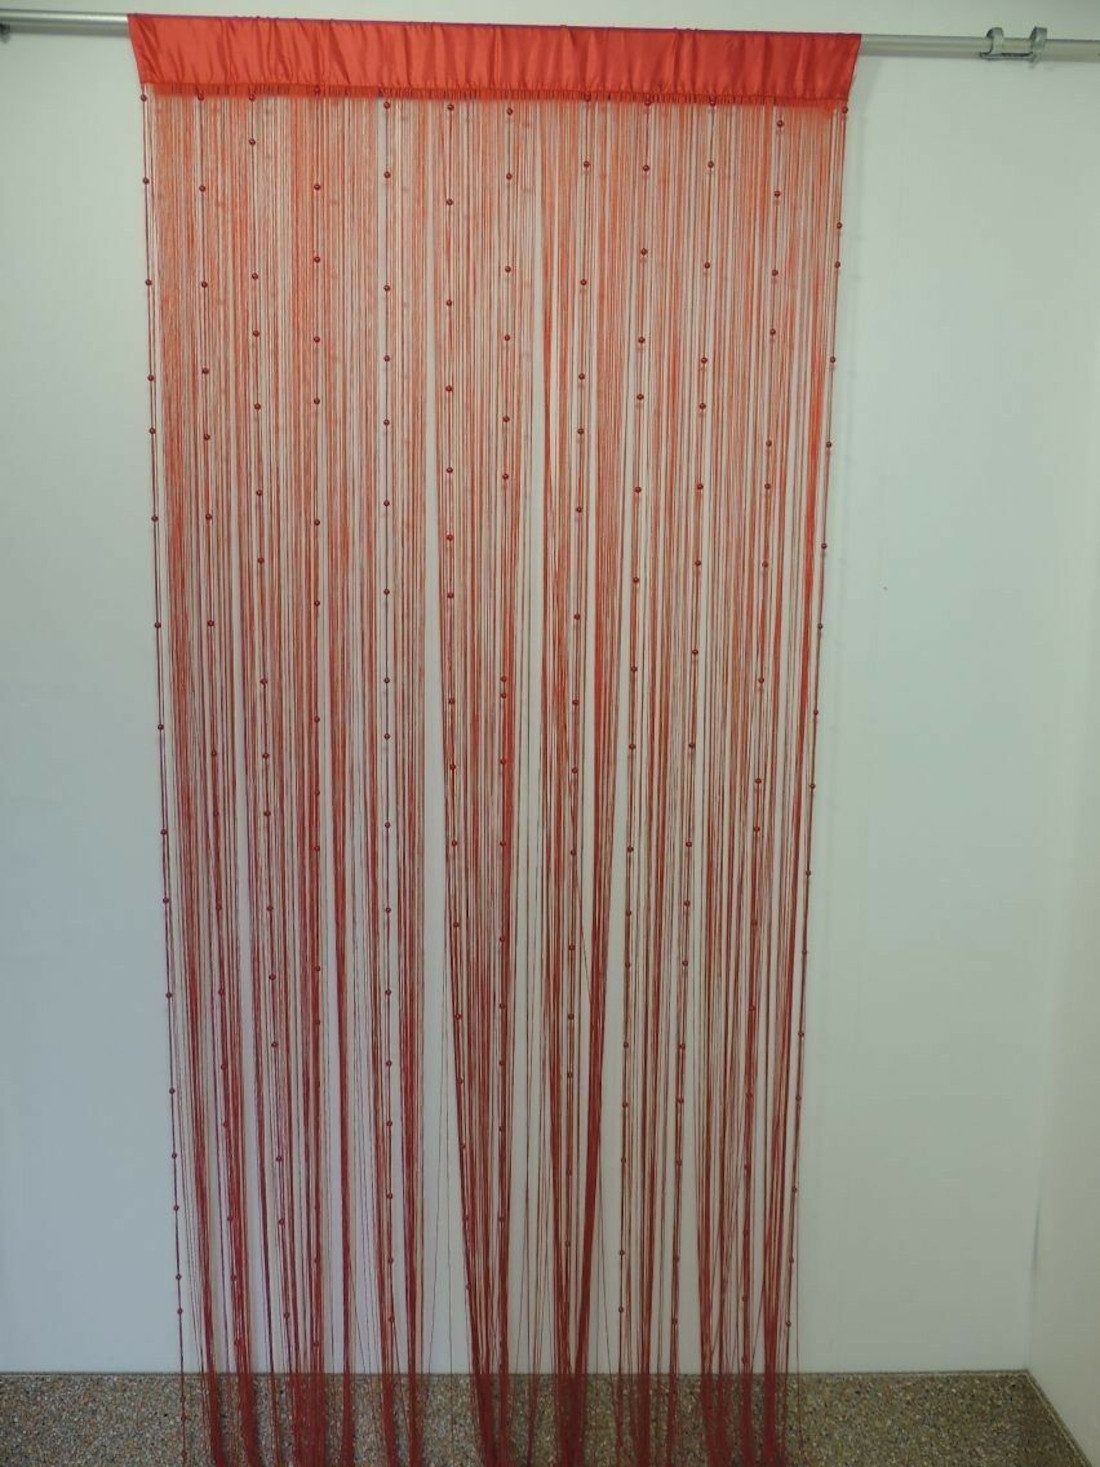 Schiebegardine Fadenvorhang mit Kunststoffperlen in verschiedenen Farben 250 x 110 cm, Fuchs Versand 24/7